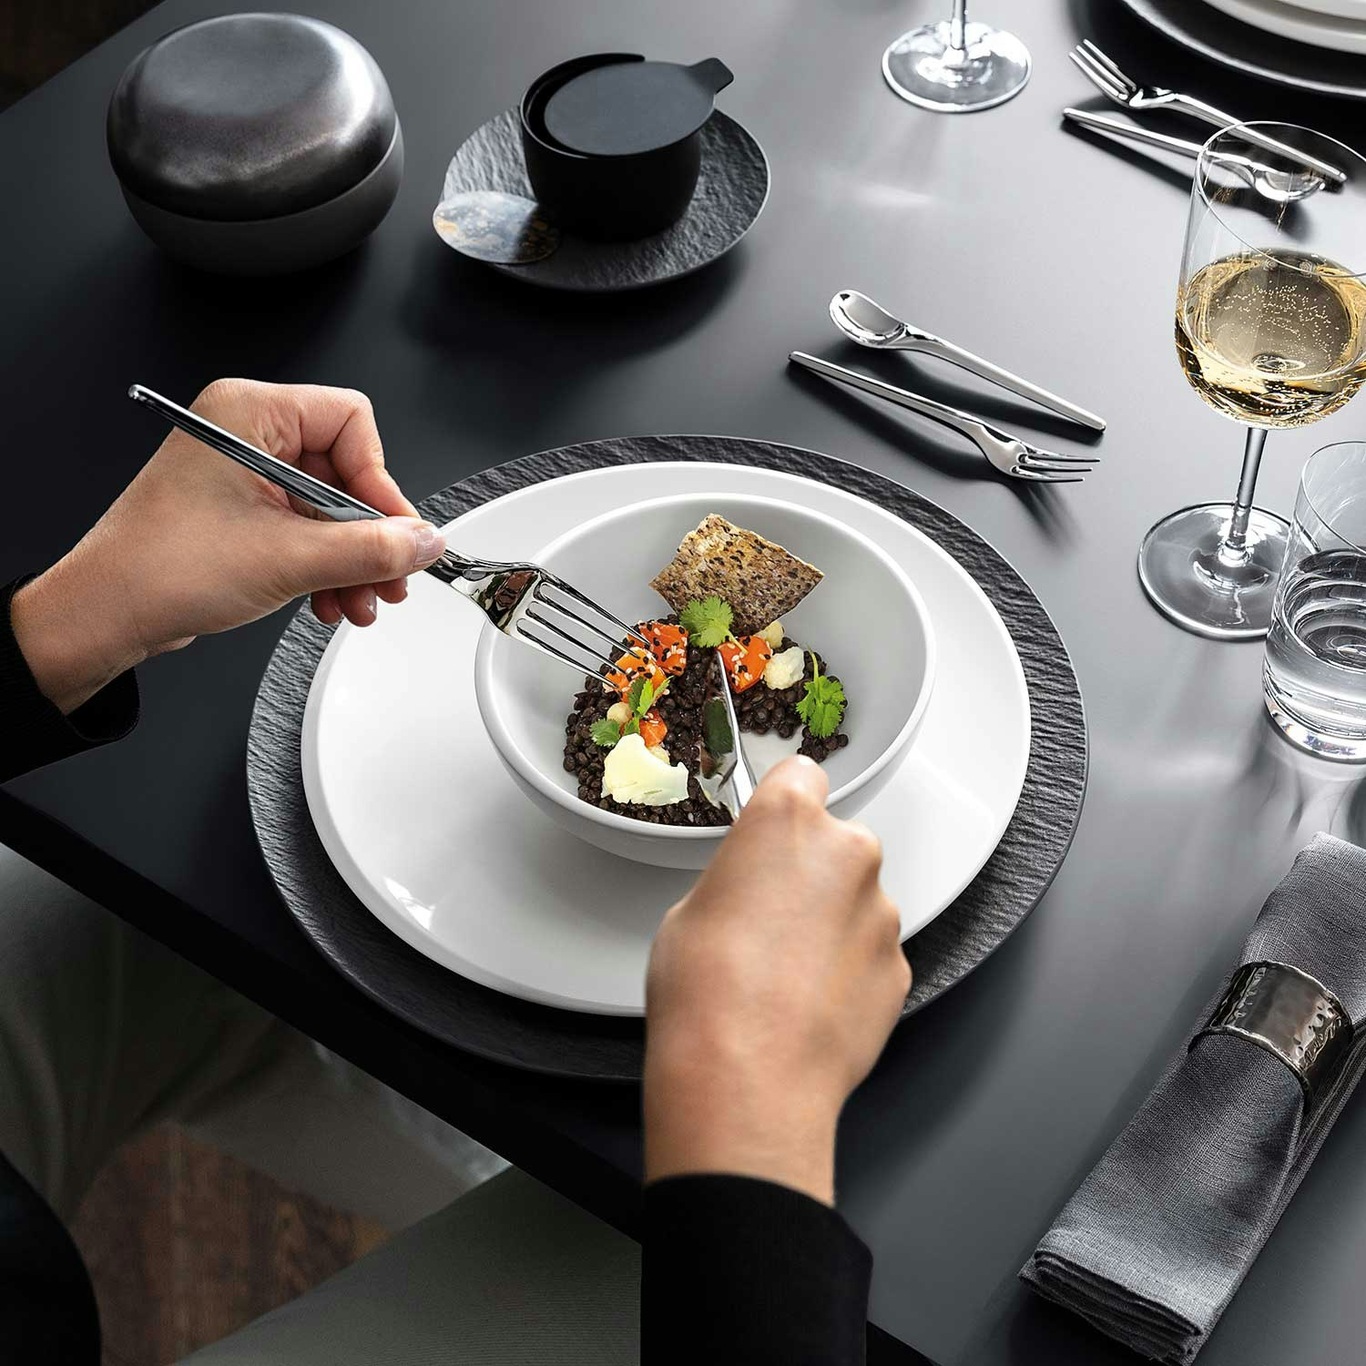 https://royaldesign.com/image/2/villeroy-boch-newmoon-cutlery-set-30-pieces-5?w=800&quality=80